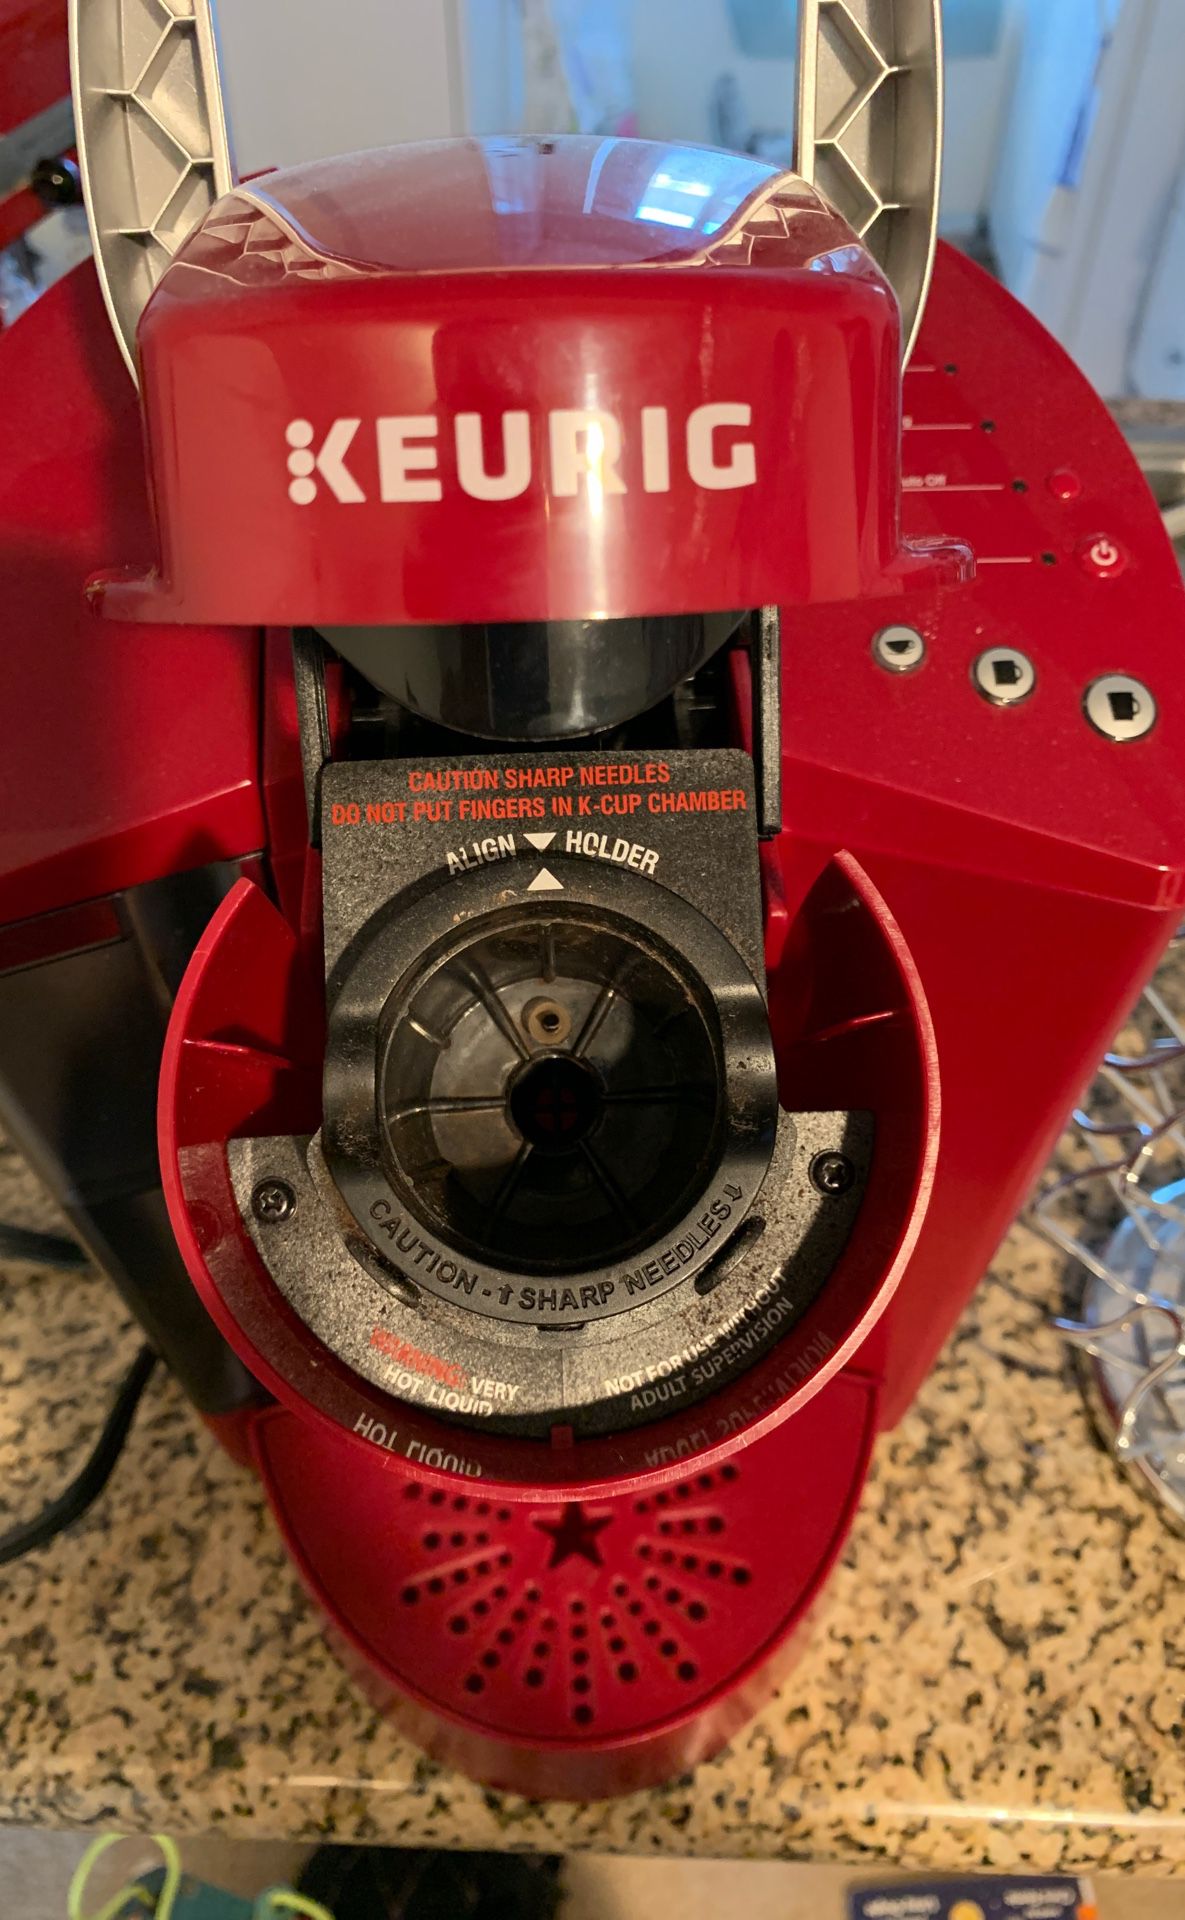 Keurig K-55 Coffee maker and Keurig Pod Carousel 24 pod holder